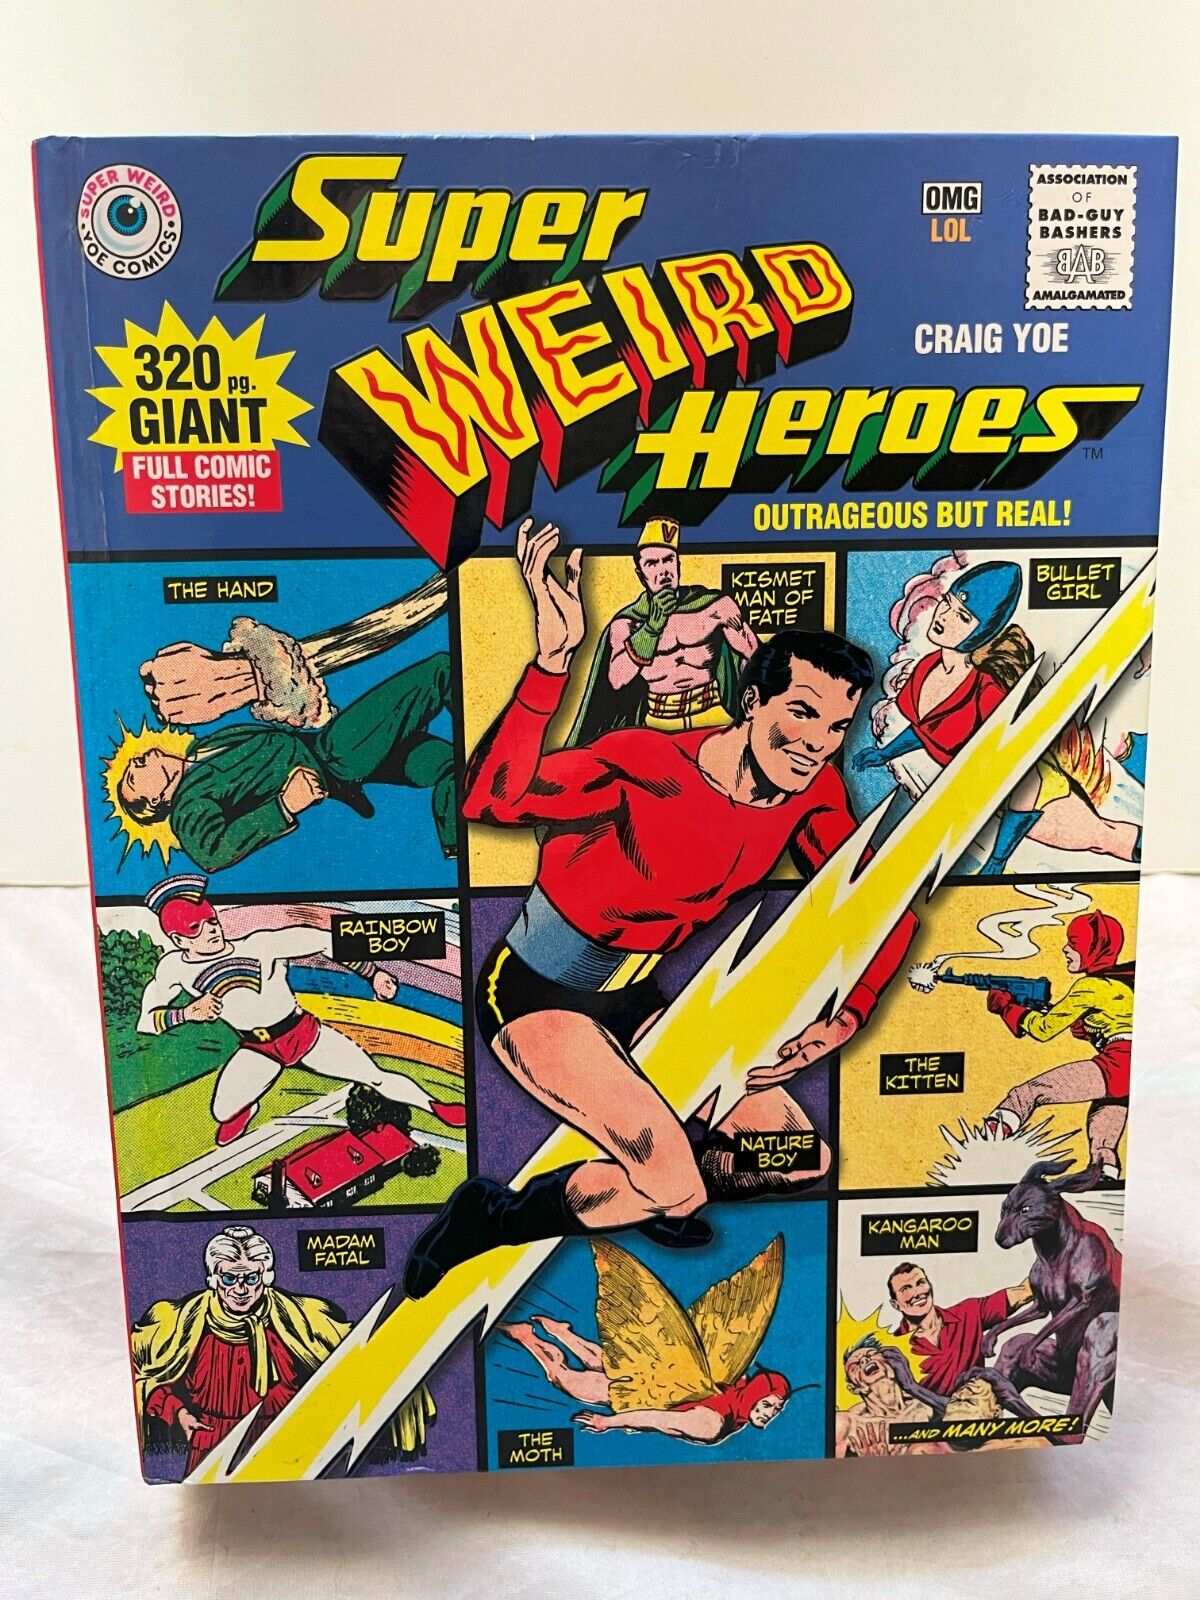 Super Weird Heroes (IDW Publishing, November 2016)